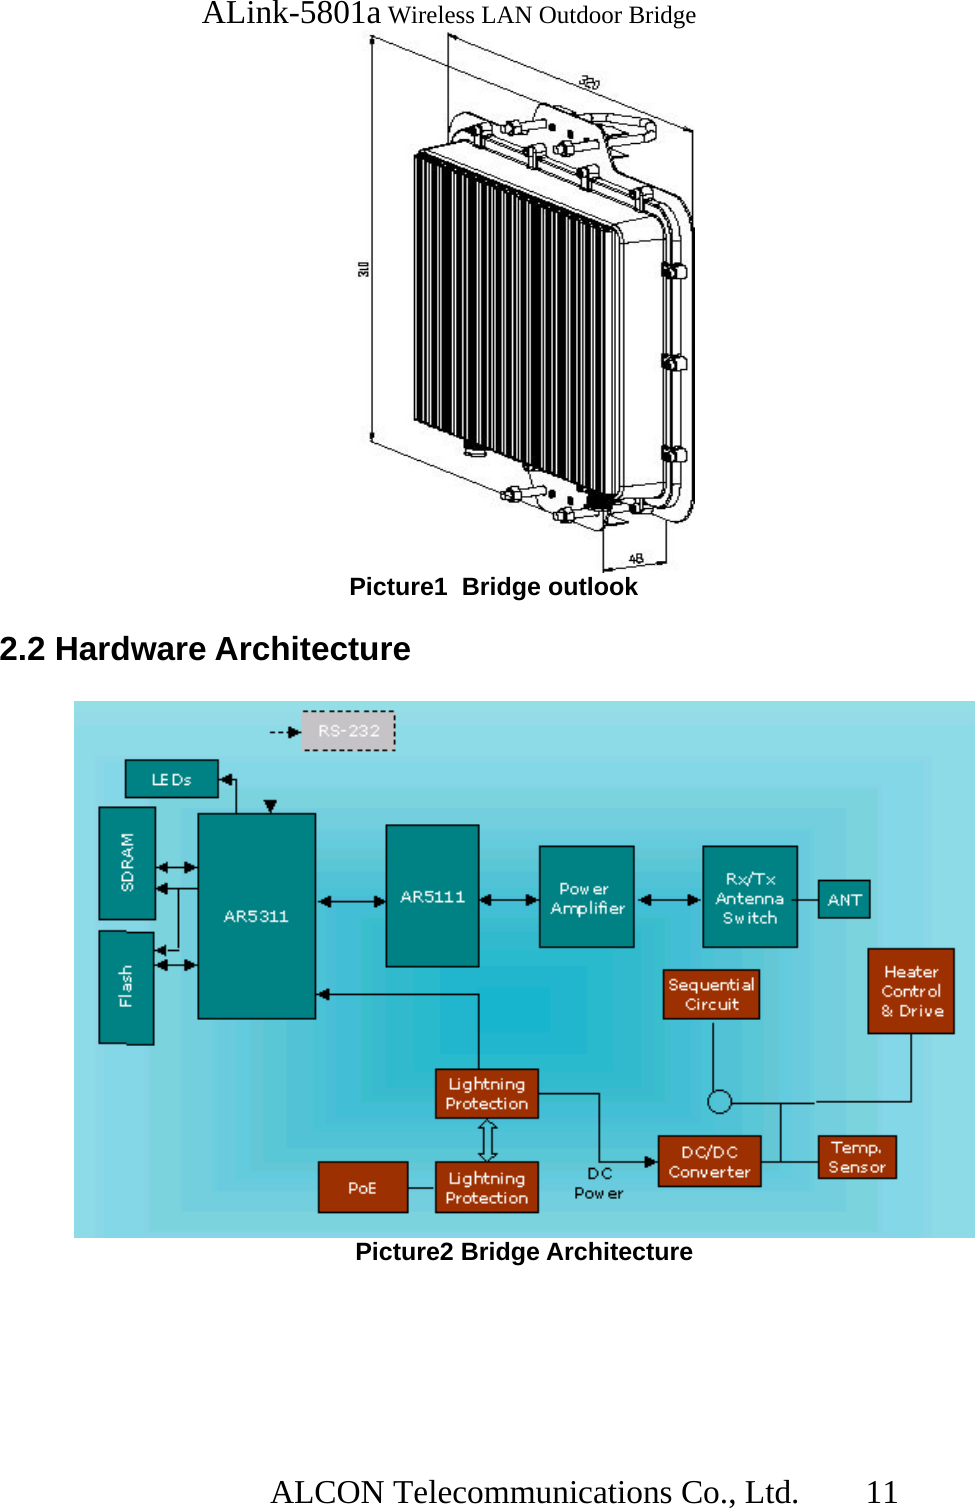   ALink-5801a Wireless LAN Outdoor Bridge                  ALCON Telecommunications Co., Ltd.   11         Picture1  Bridge outlook  2.2 Hardware Architecture     Picture2 Bridge Architecture 